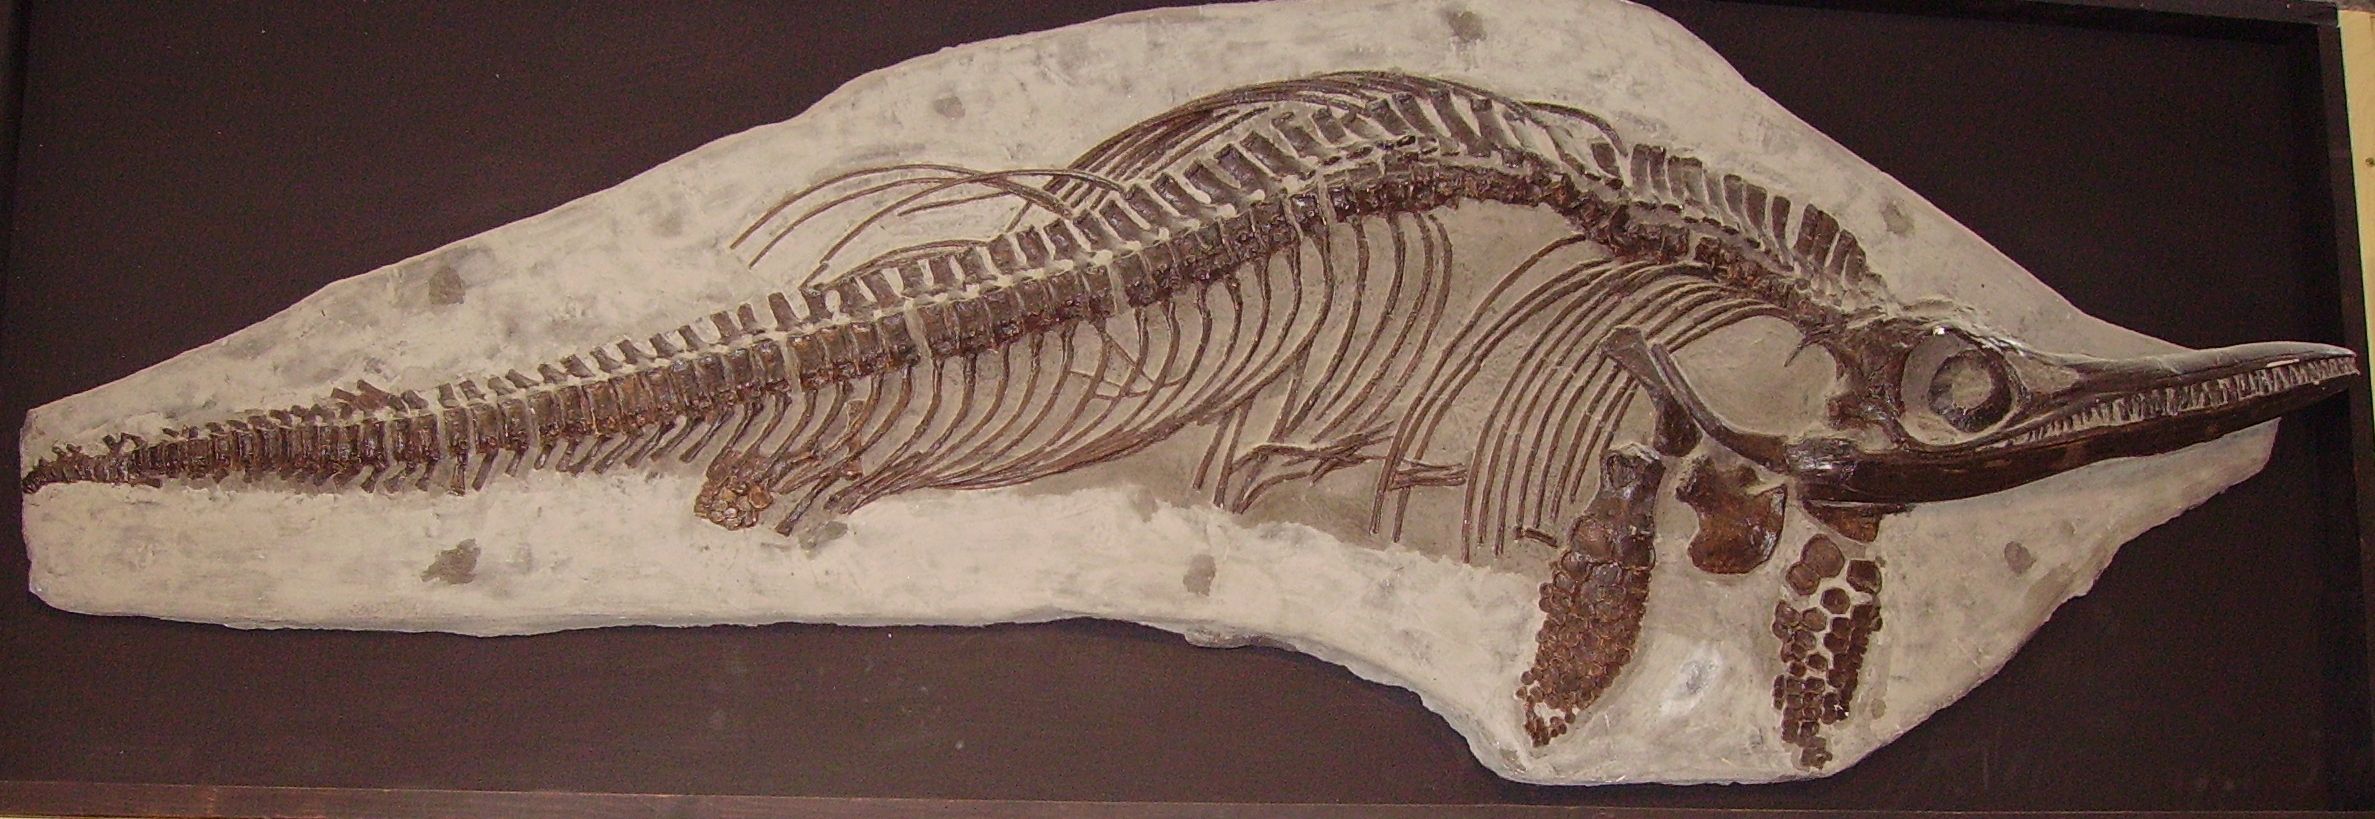 Ichthyosaur mounted skeleton | Fossils | Pinterest | Skeletons and ...